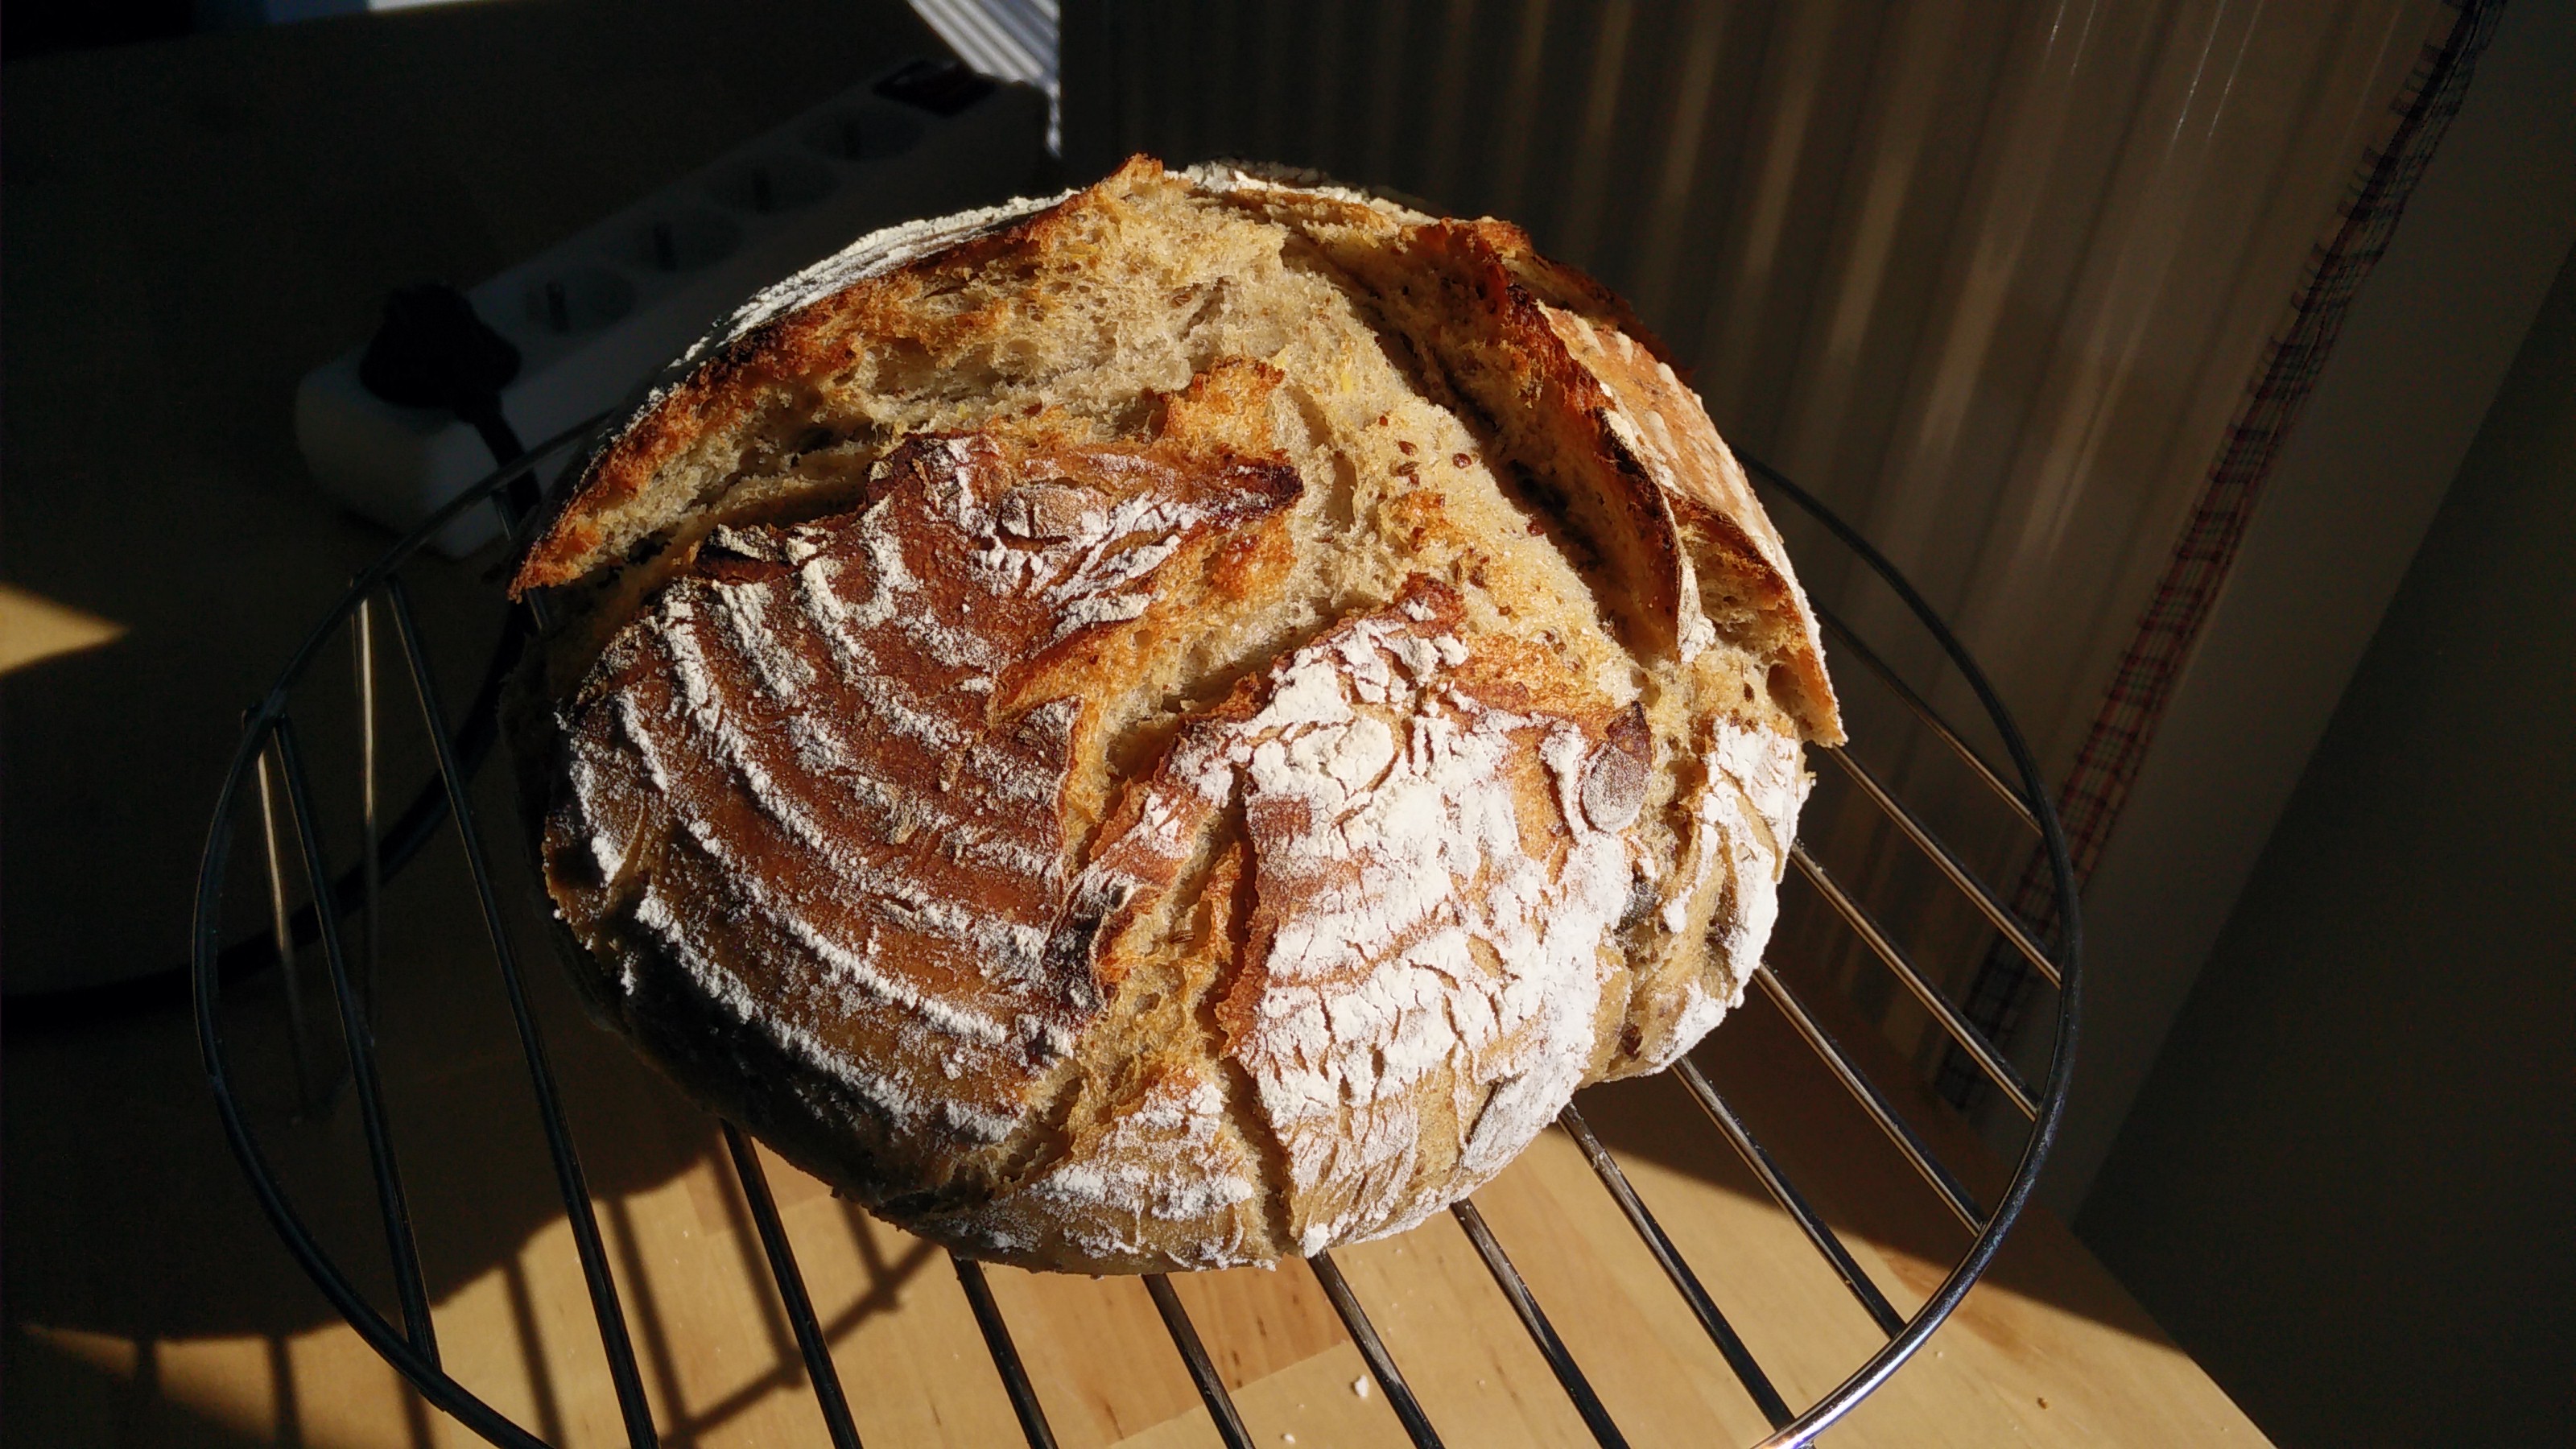 Bread photo data/2020-09-21/2020-09-21%2014.36.35.jpg